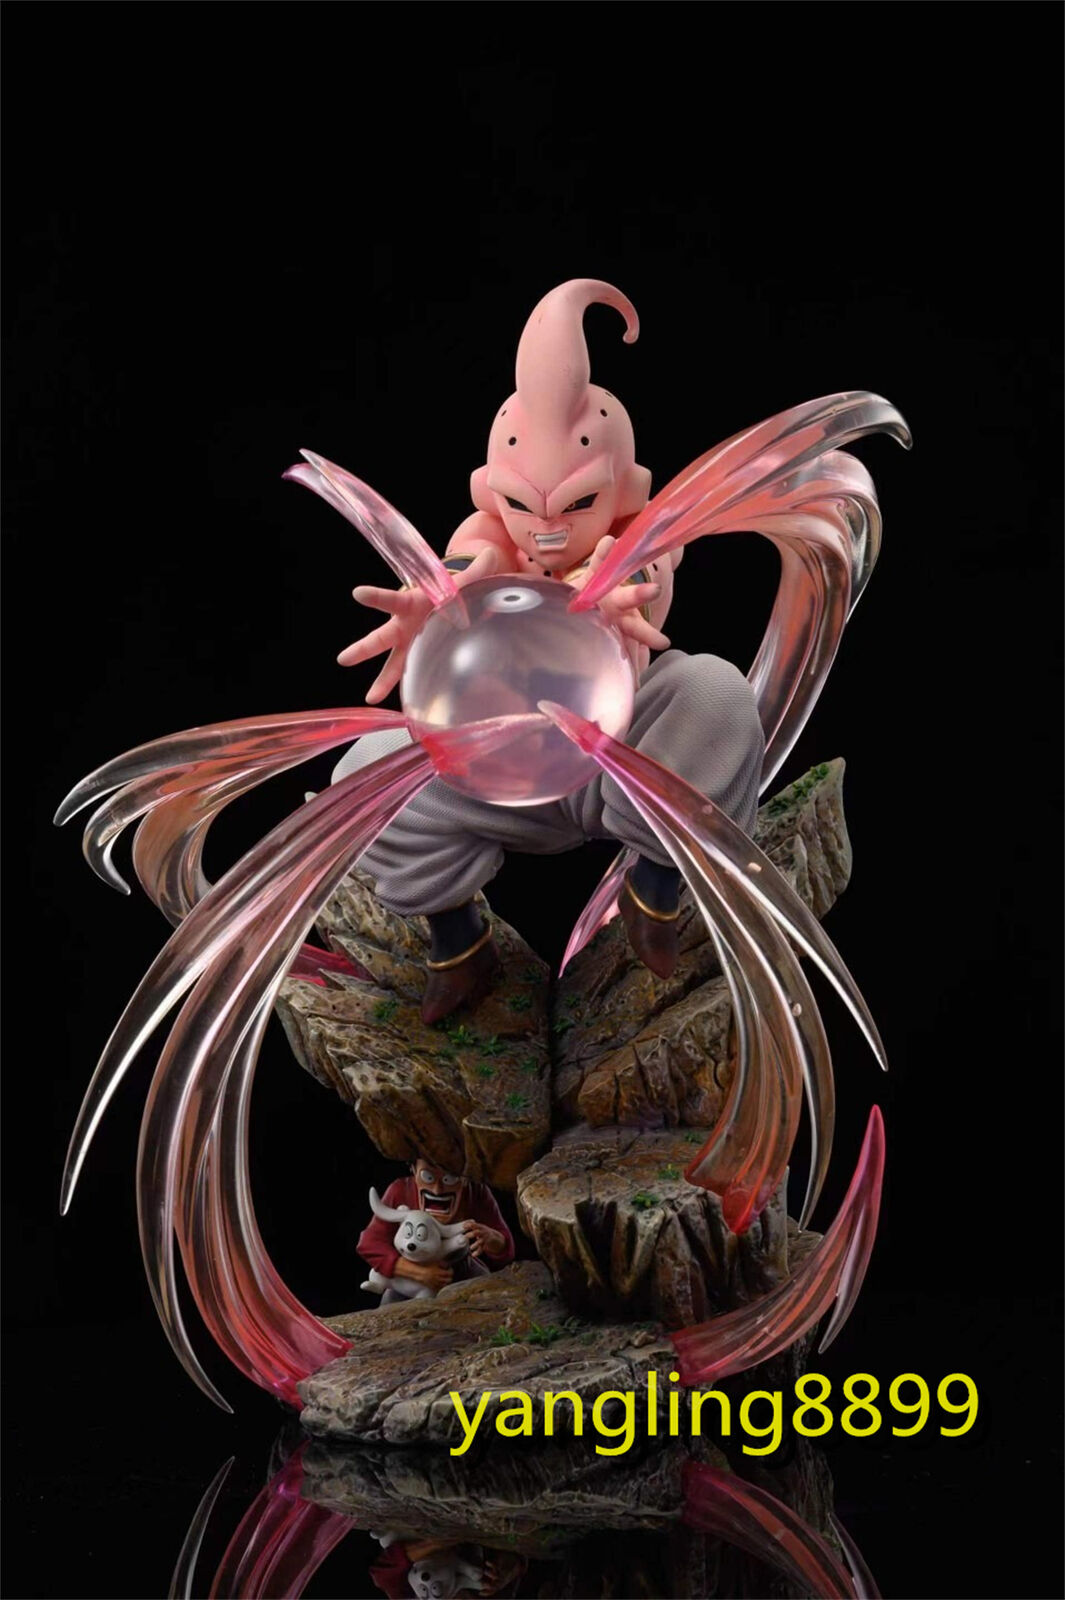 Studio Product Dragon Ball Buu GK Resin Figure Model Collect Toy Gift Decor 28cm